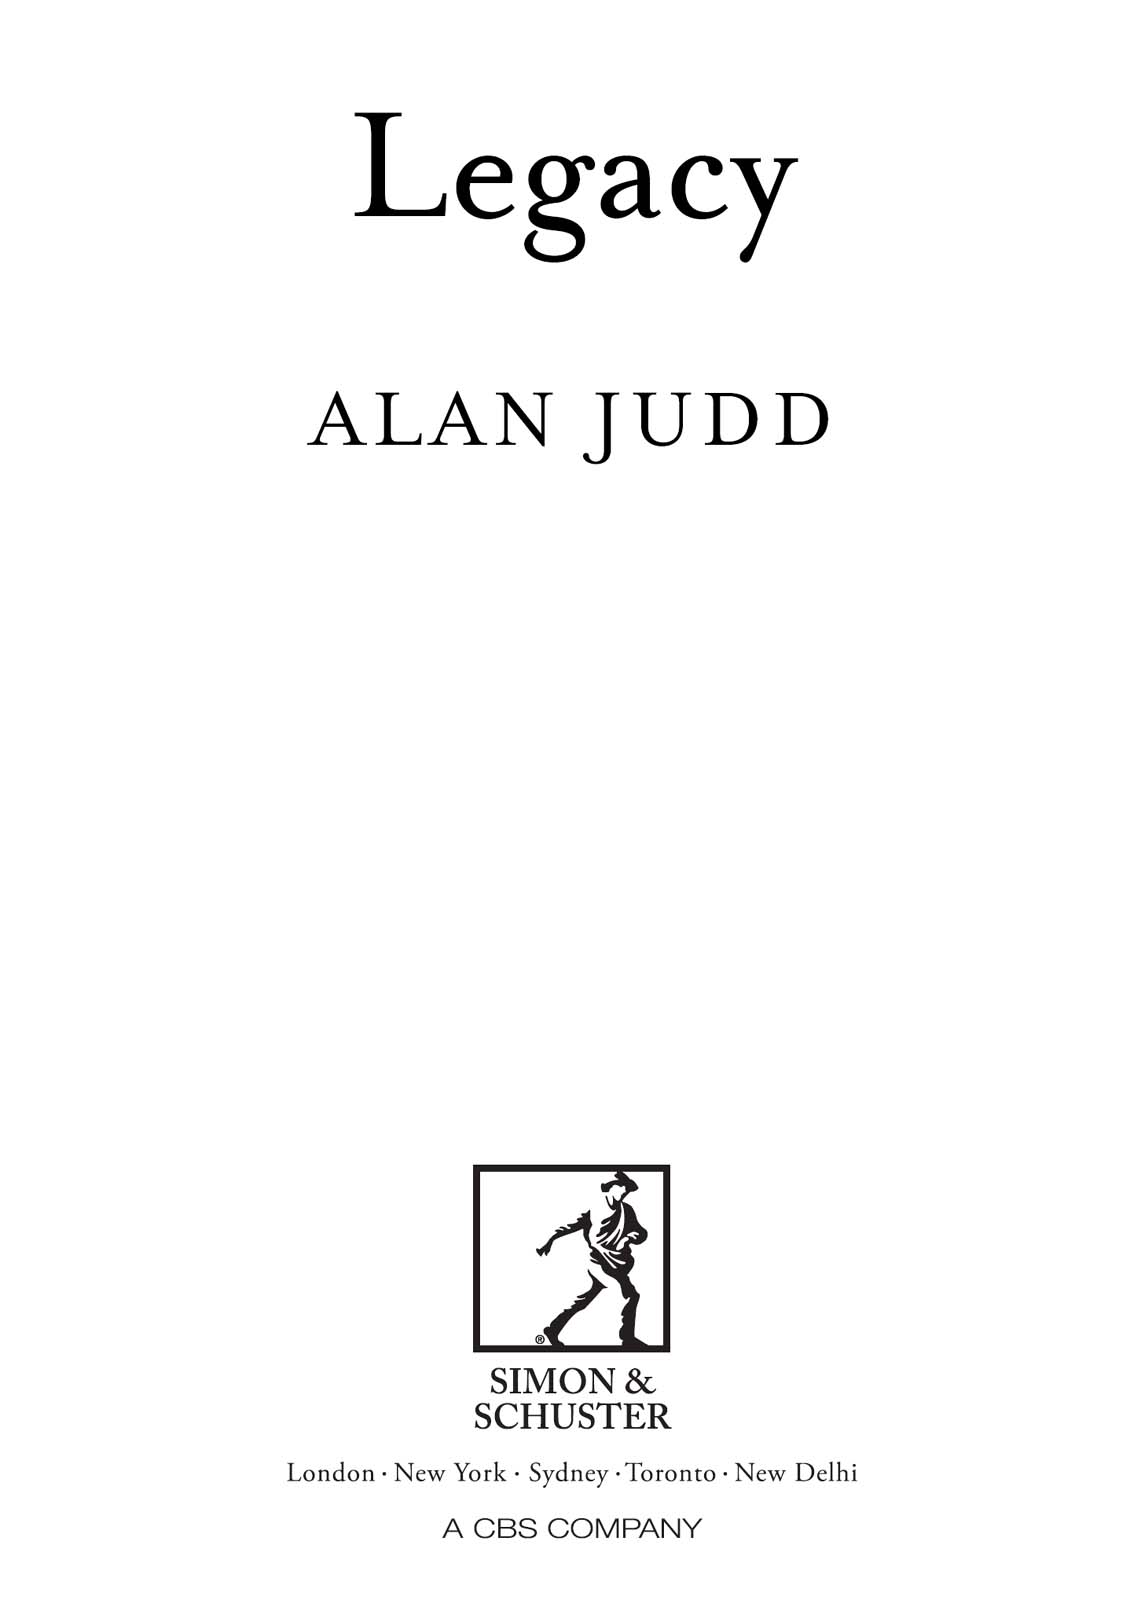 Legacy by Alan Judd